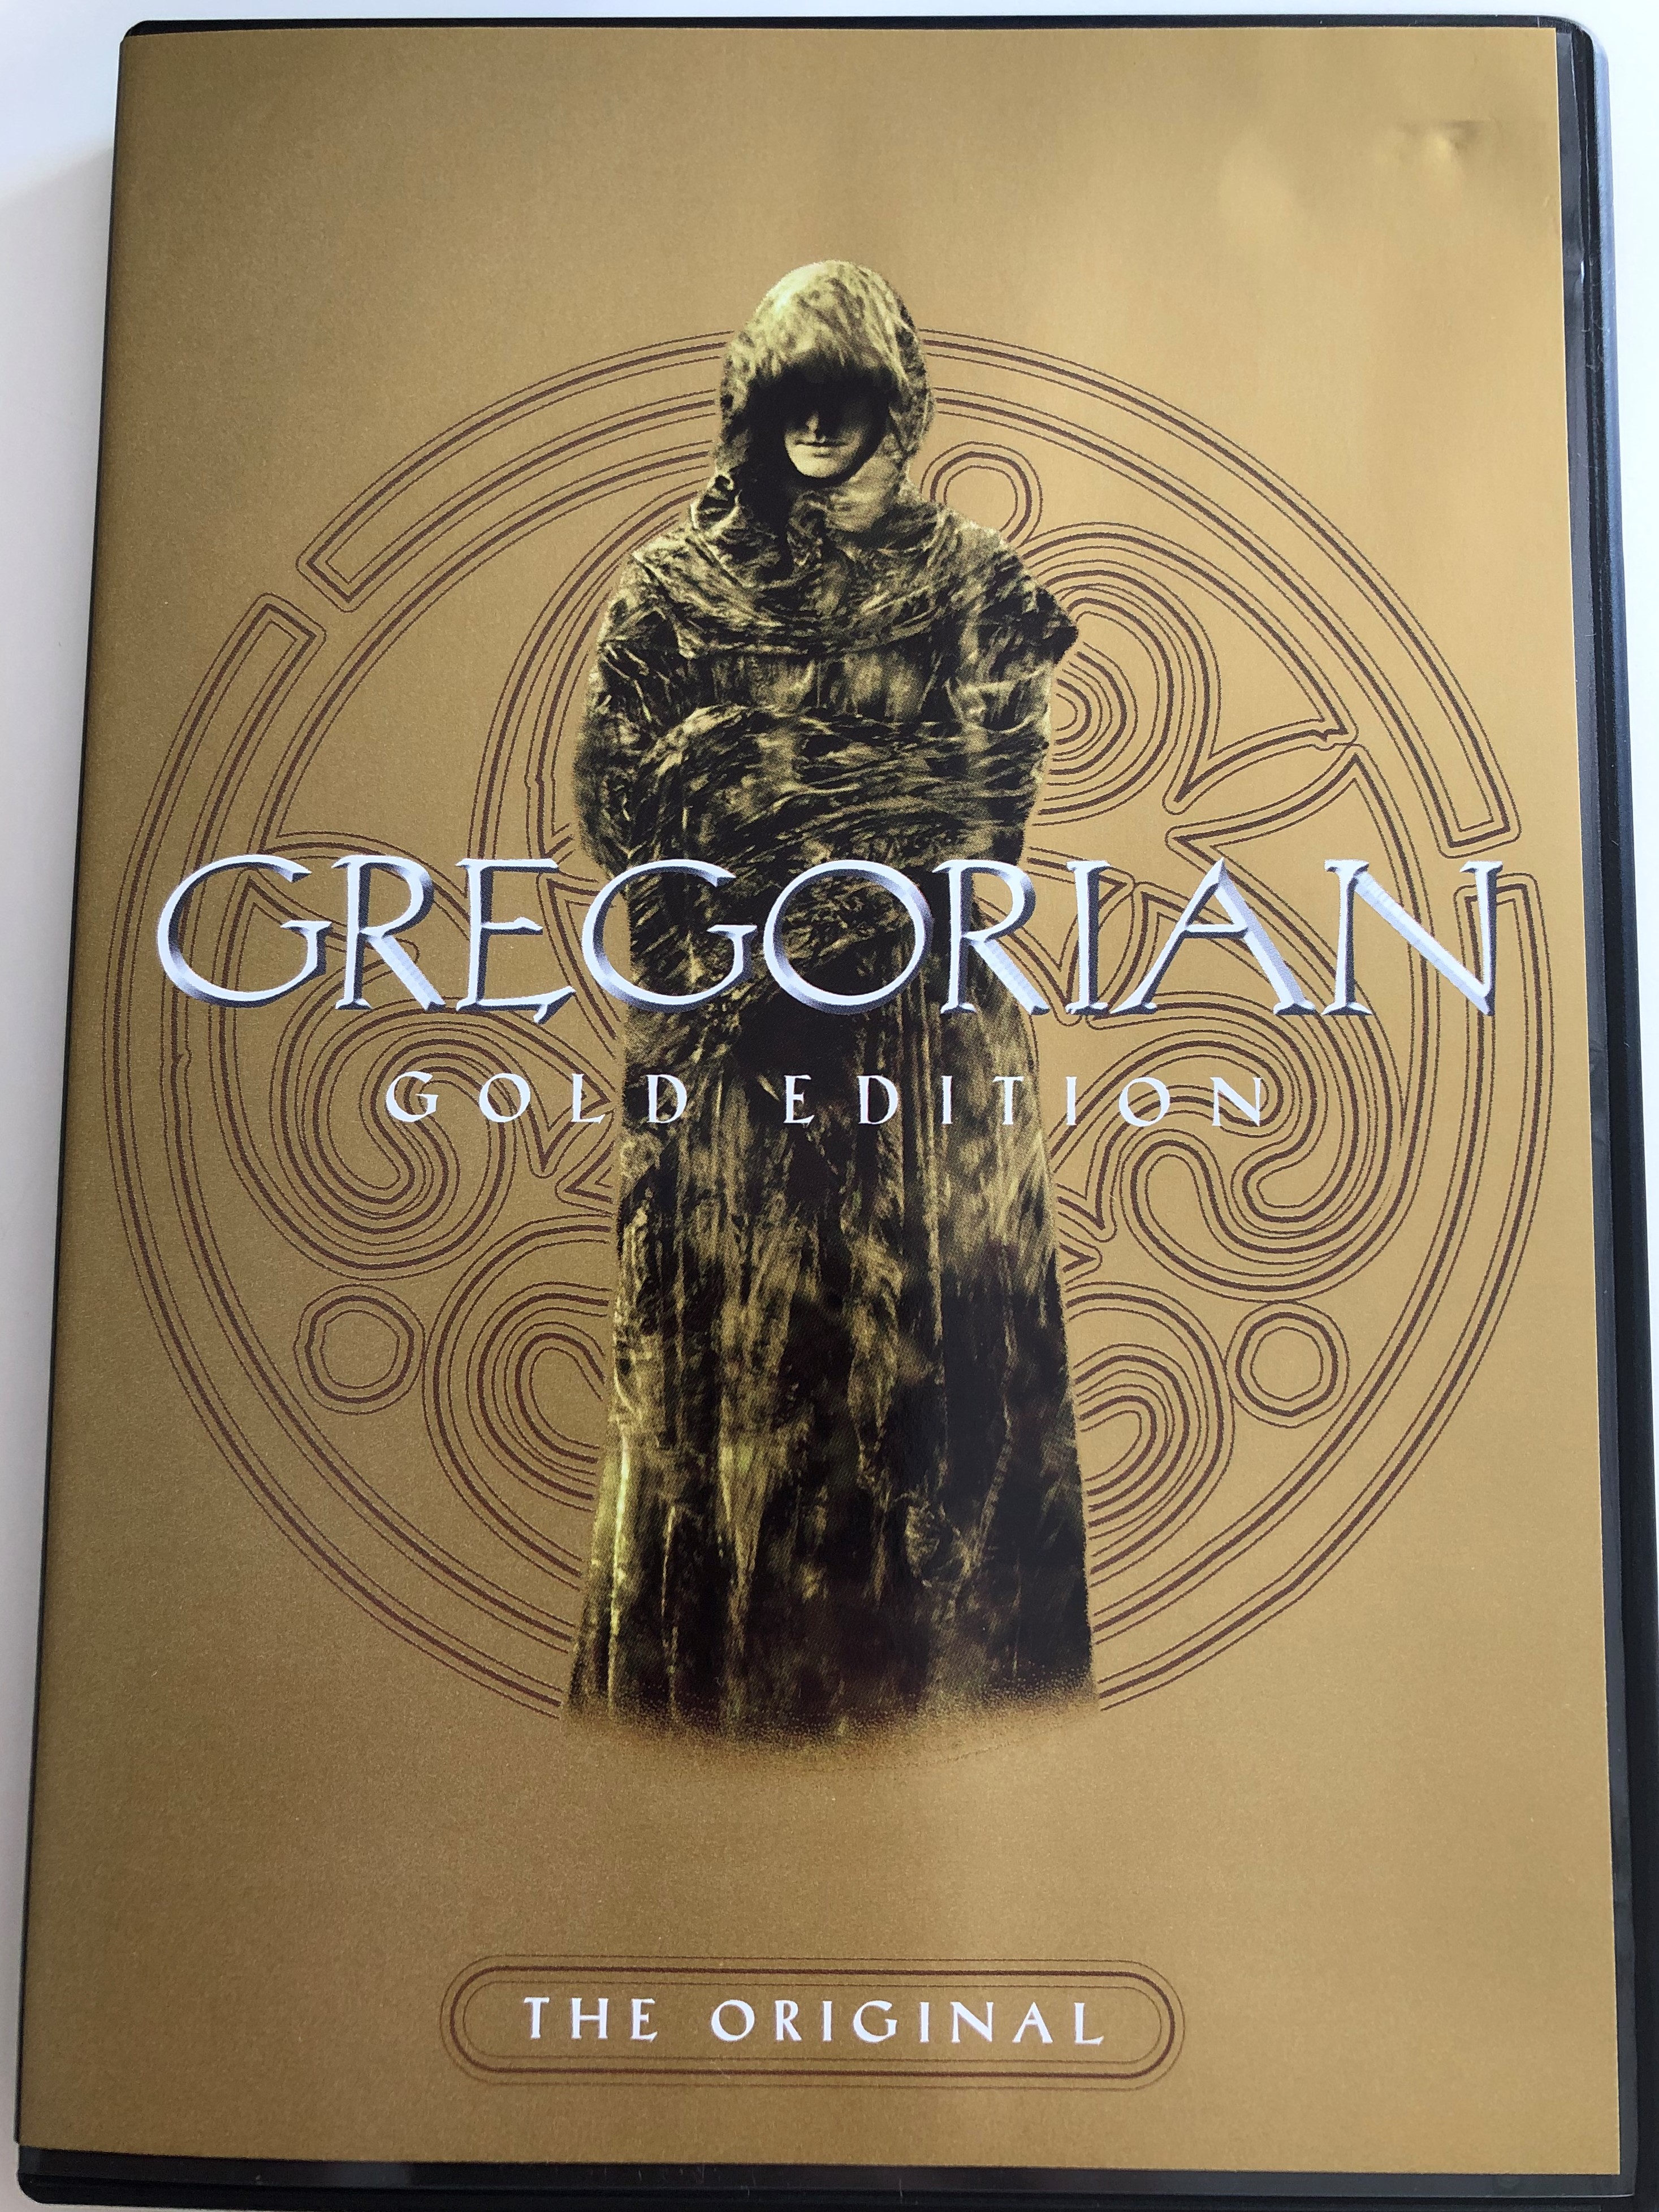 gregorian-dvd-2003-gold-edition-the-original-1.jpg